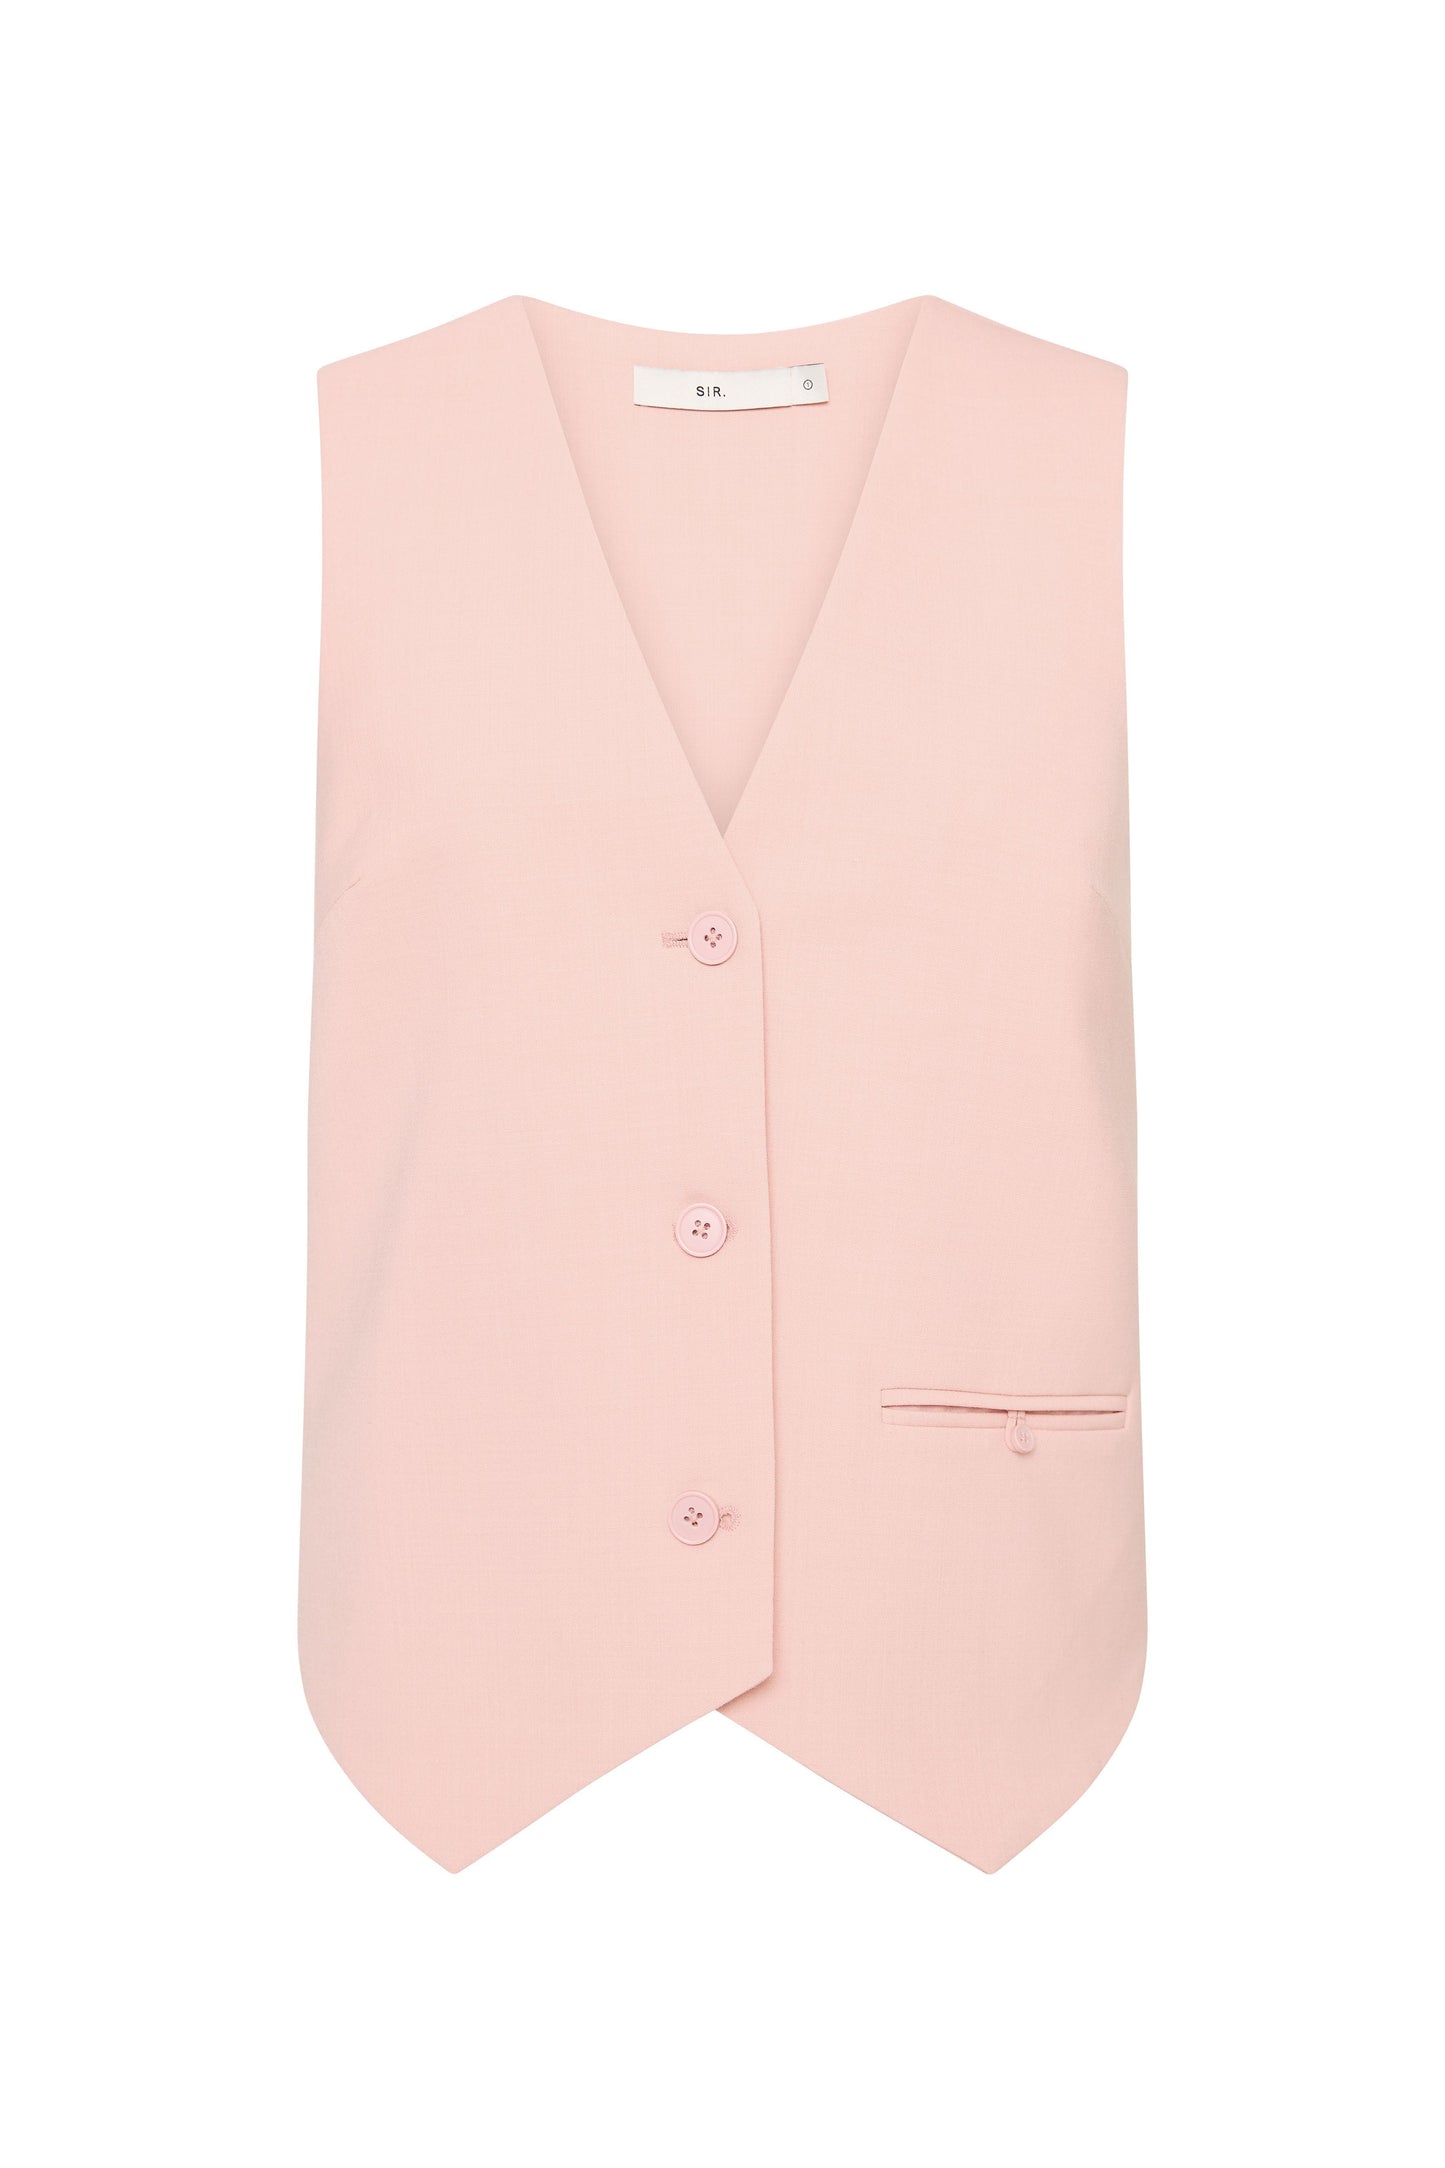 DARIO VEST-PINK Jackets SIR. 0 Pink 